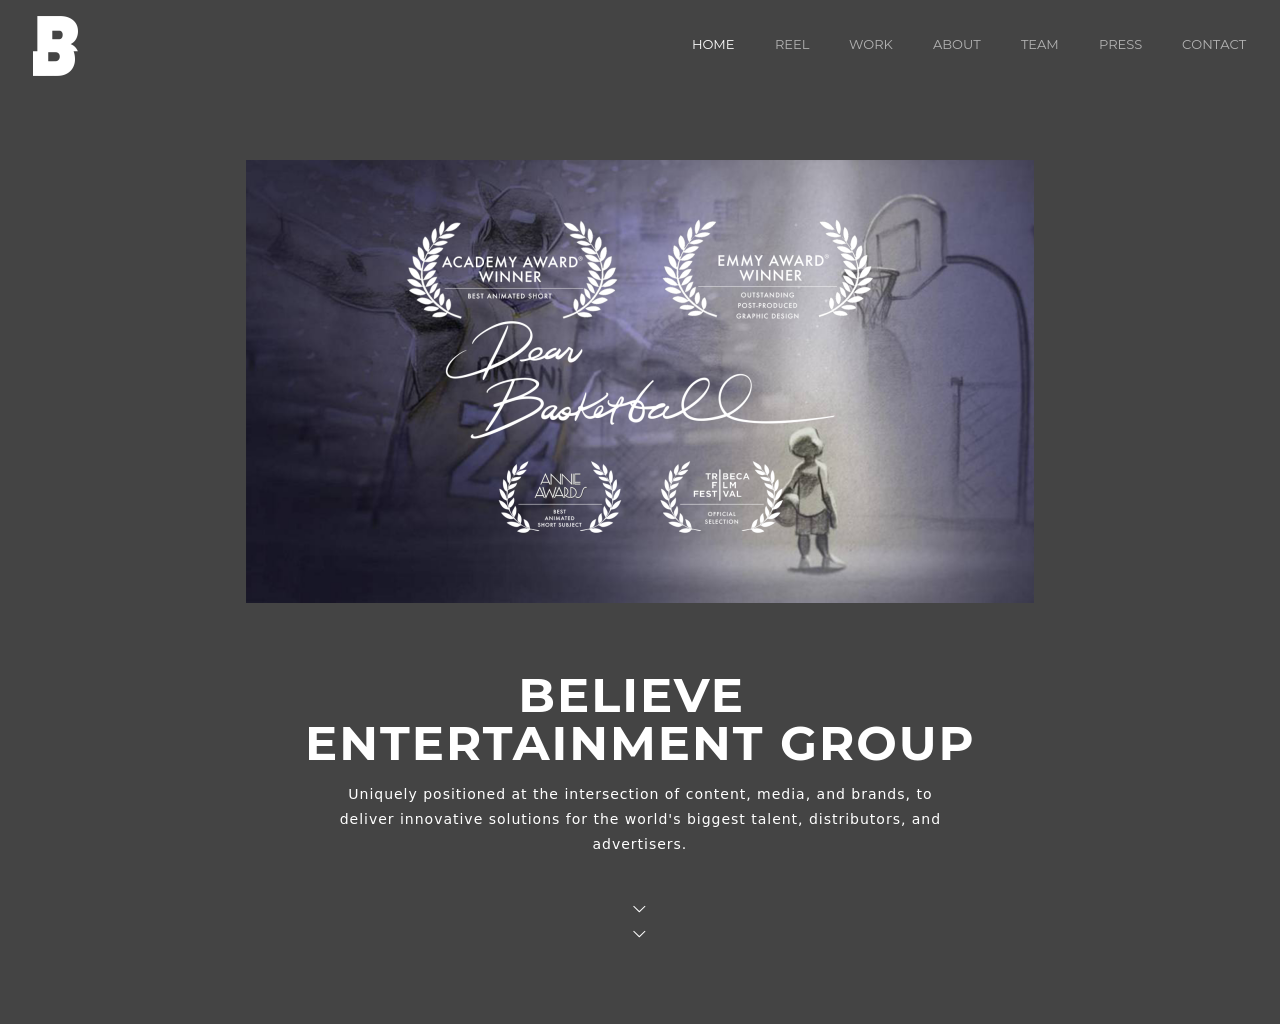 Believe entertainment group jobs